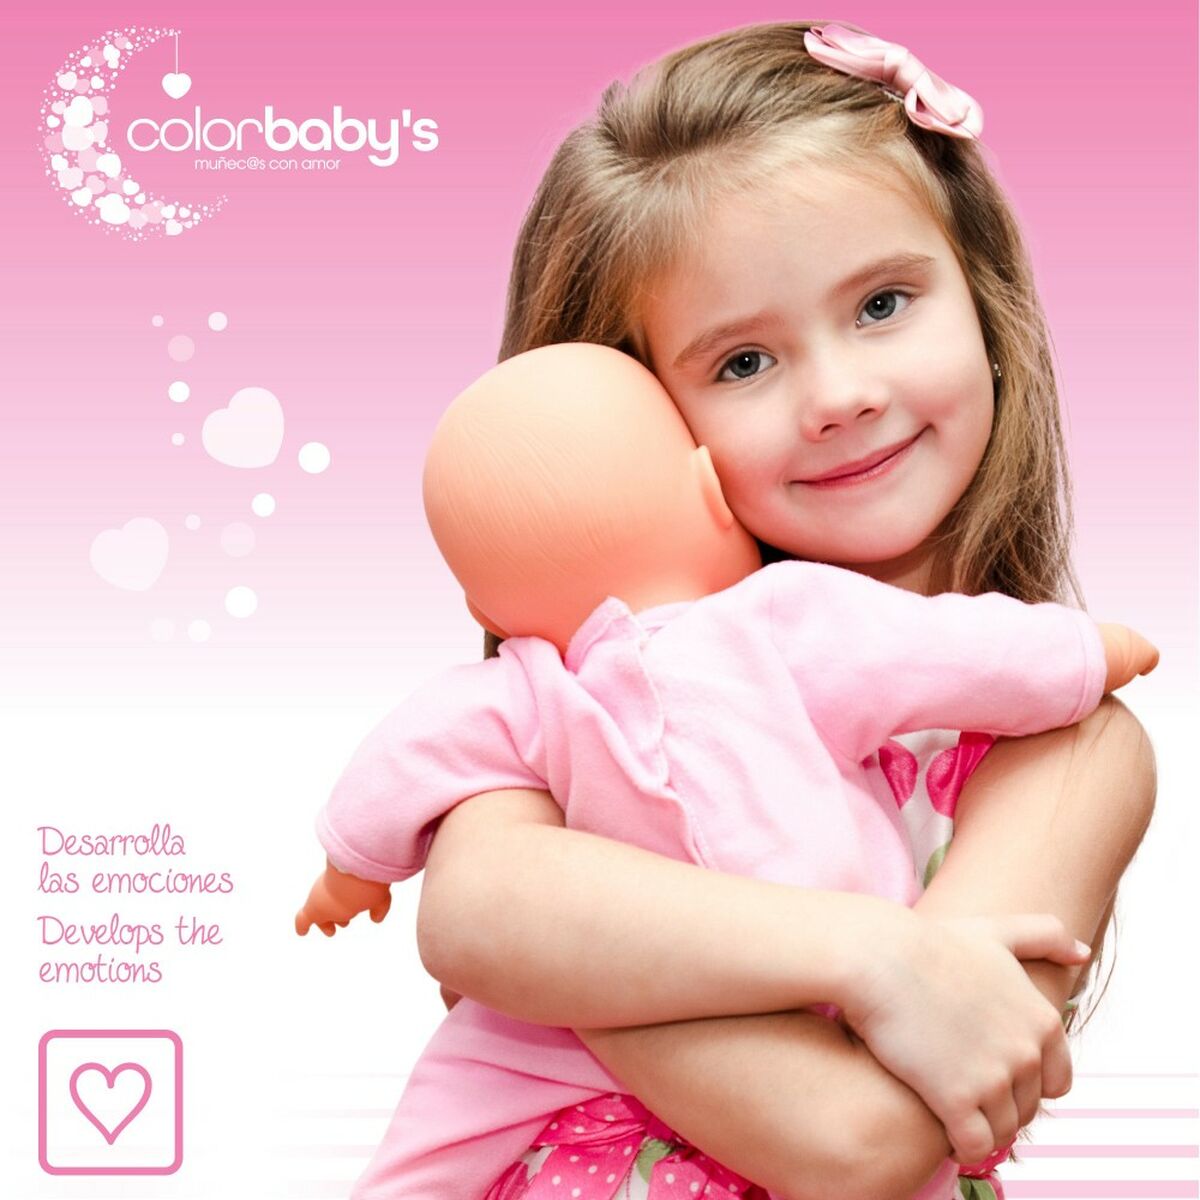 Baby doll Colorbaby 2 Unità 22,5 x 34,5 x 33,5 cm